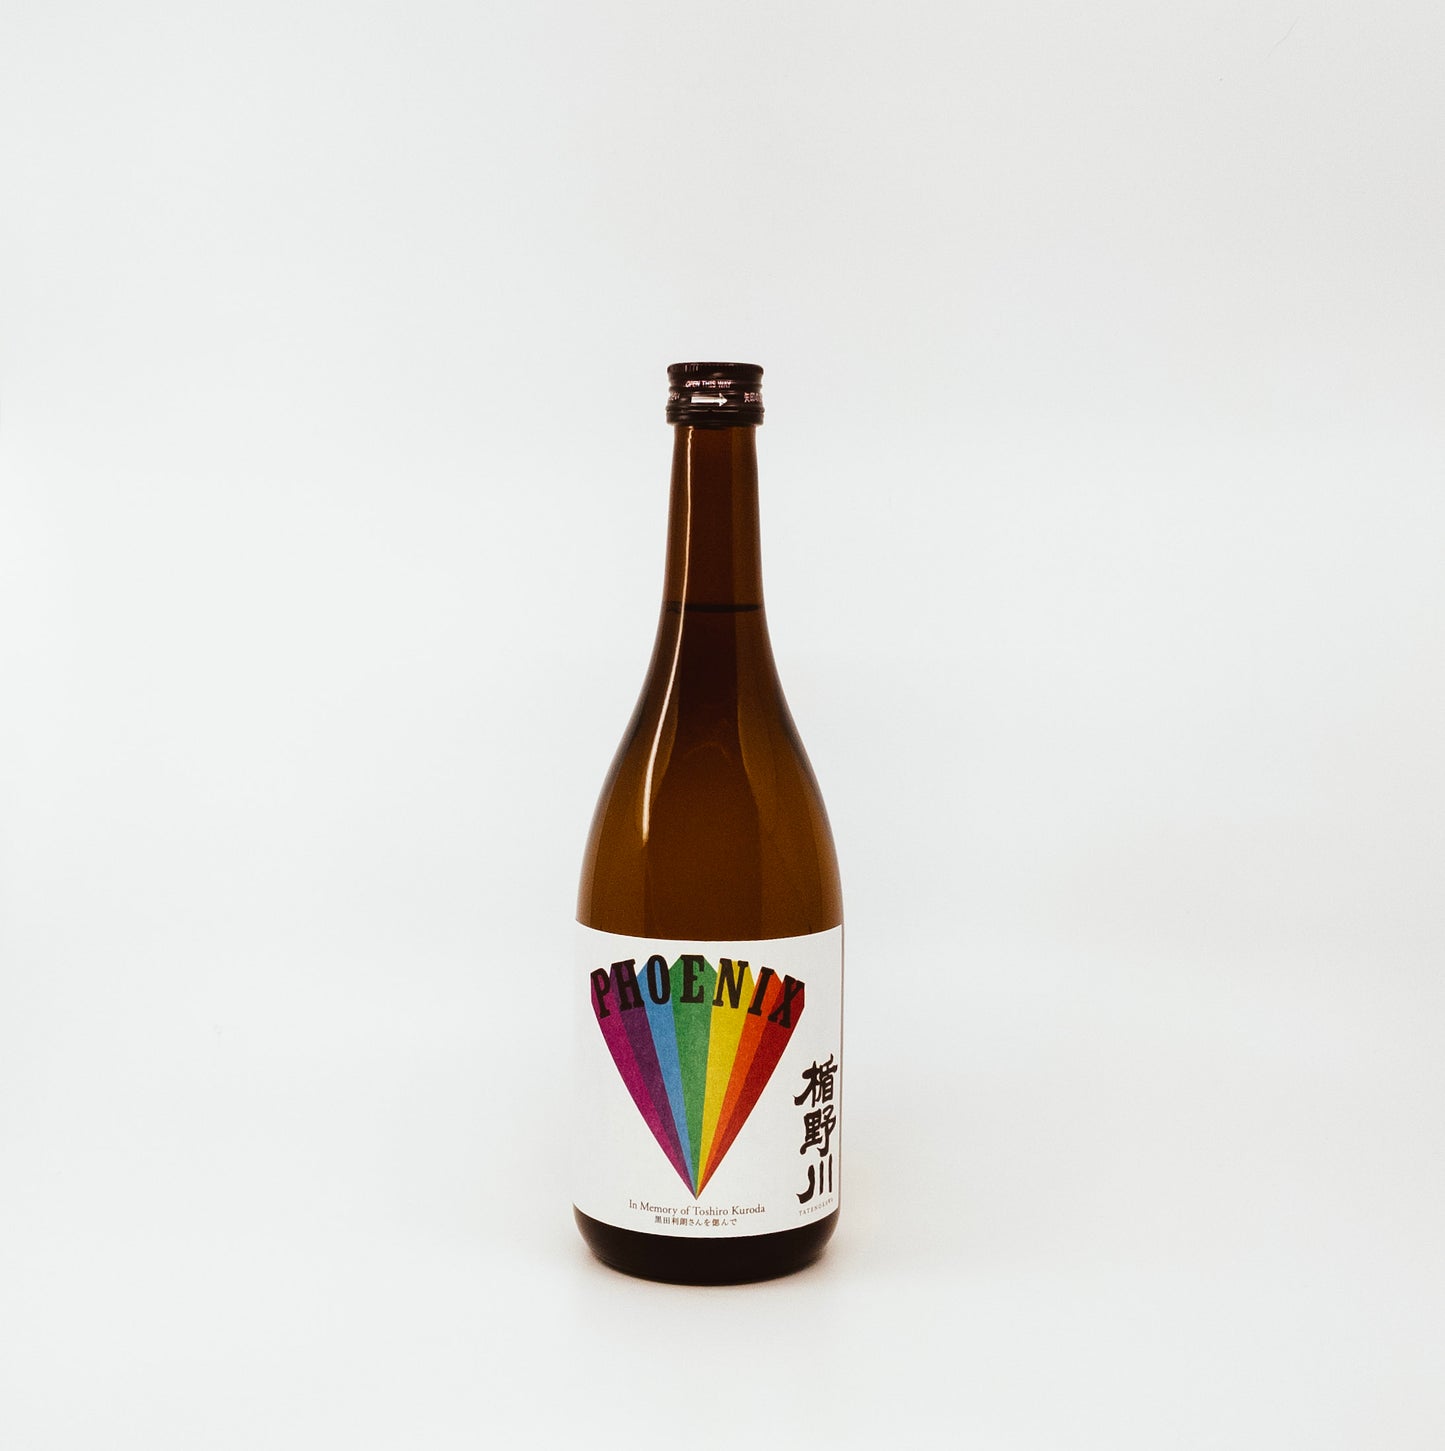 wine bottle with rainbow on label